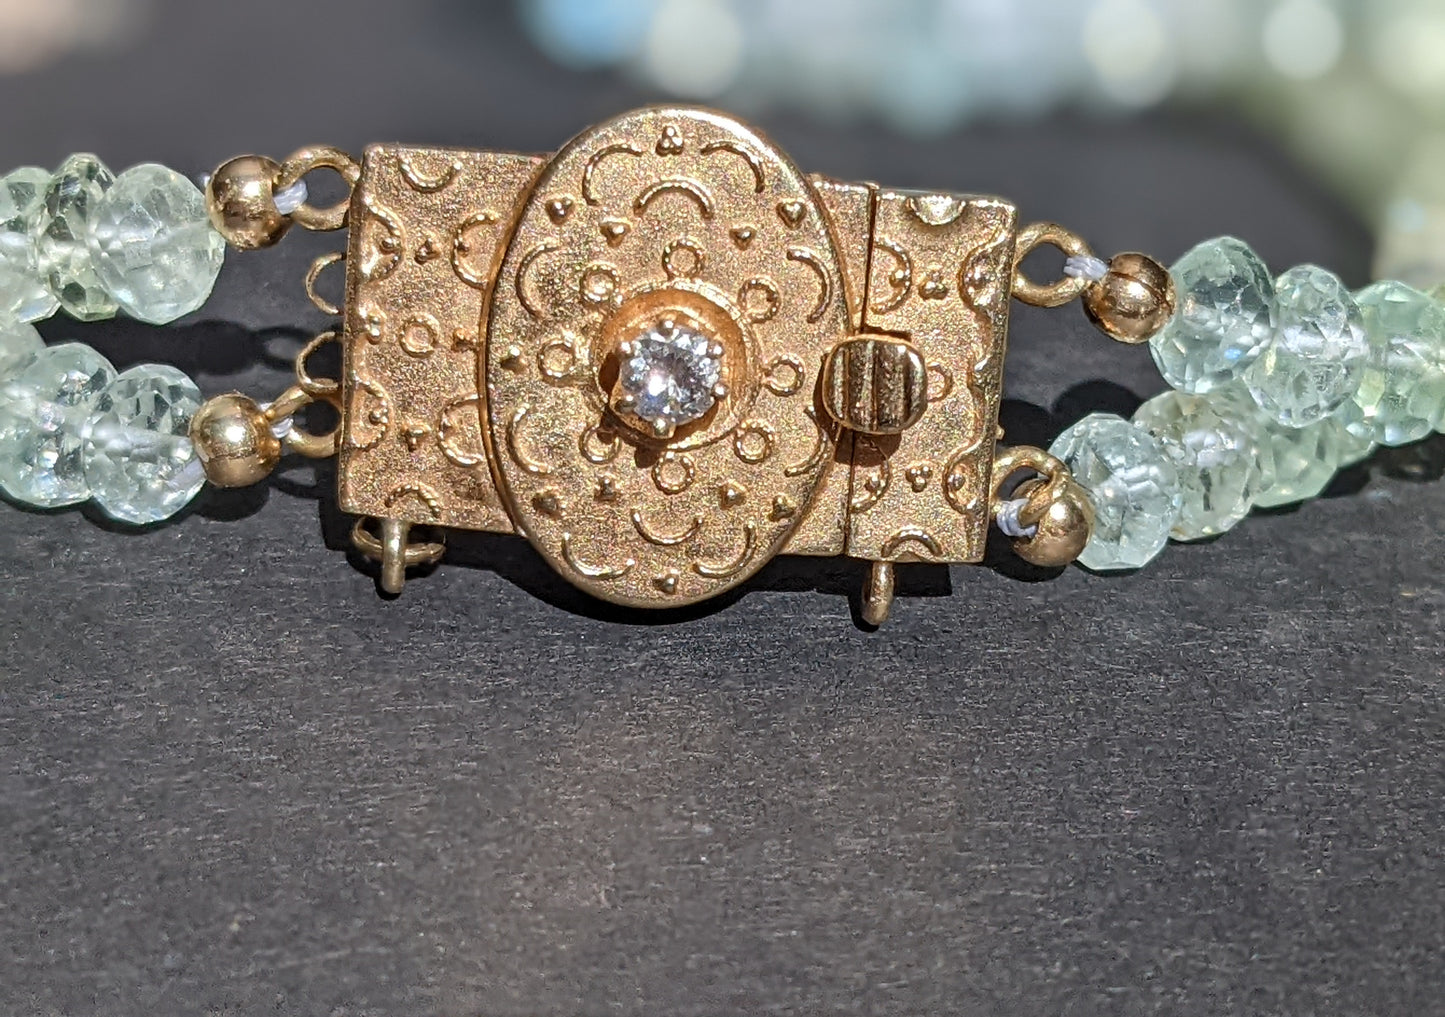 Two row aquamarine bracelet with antique 14kt clasp